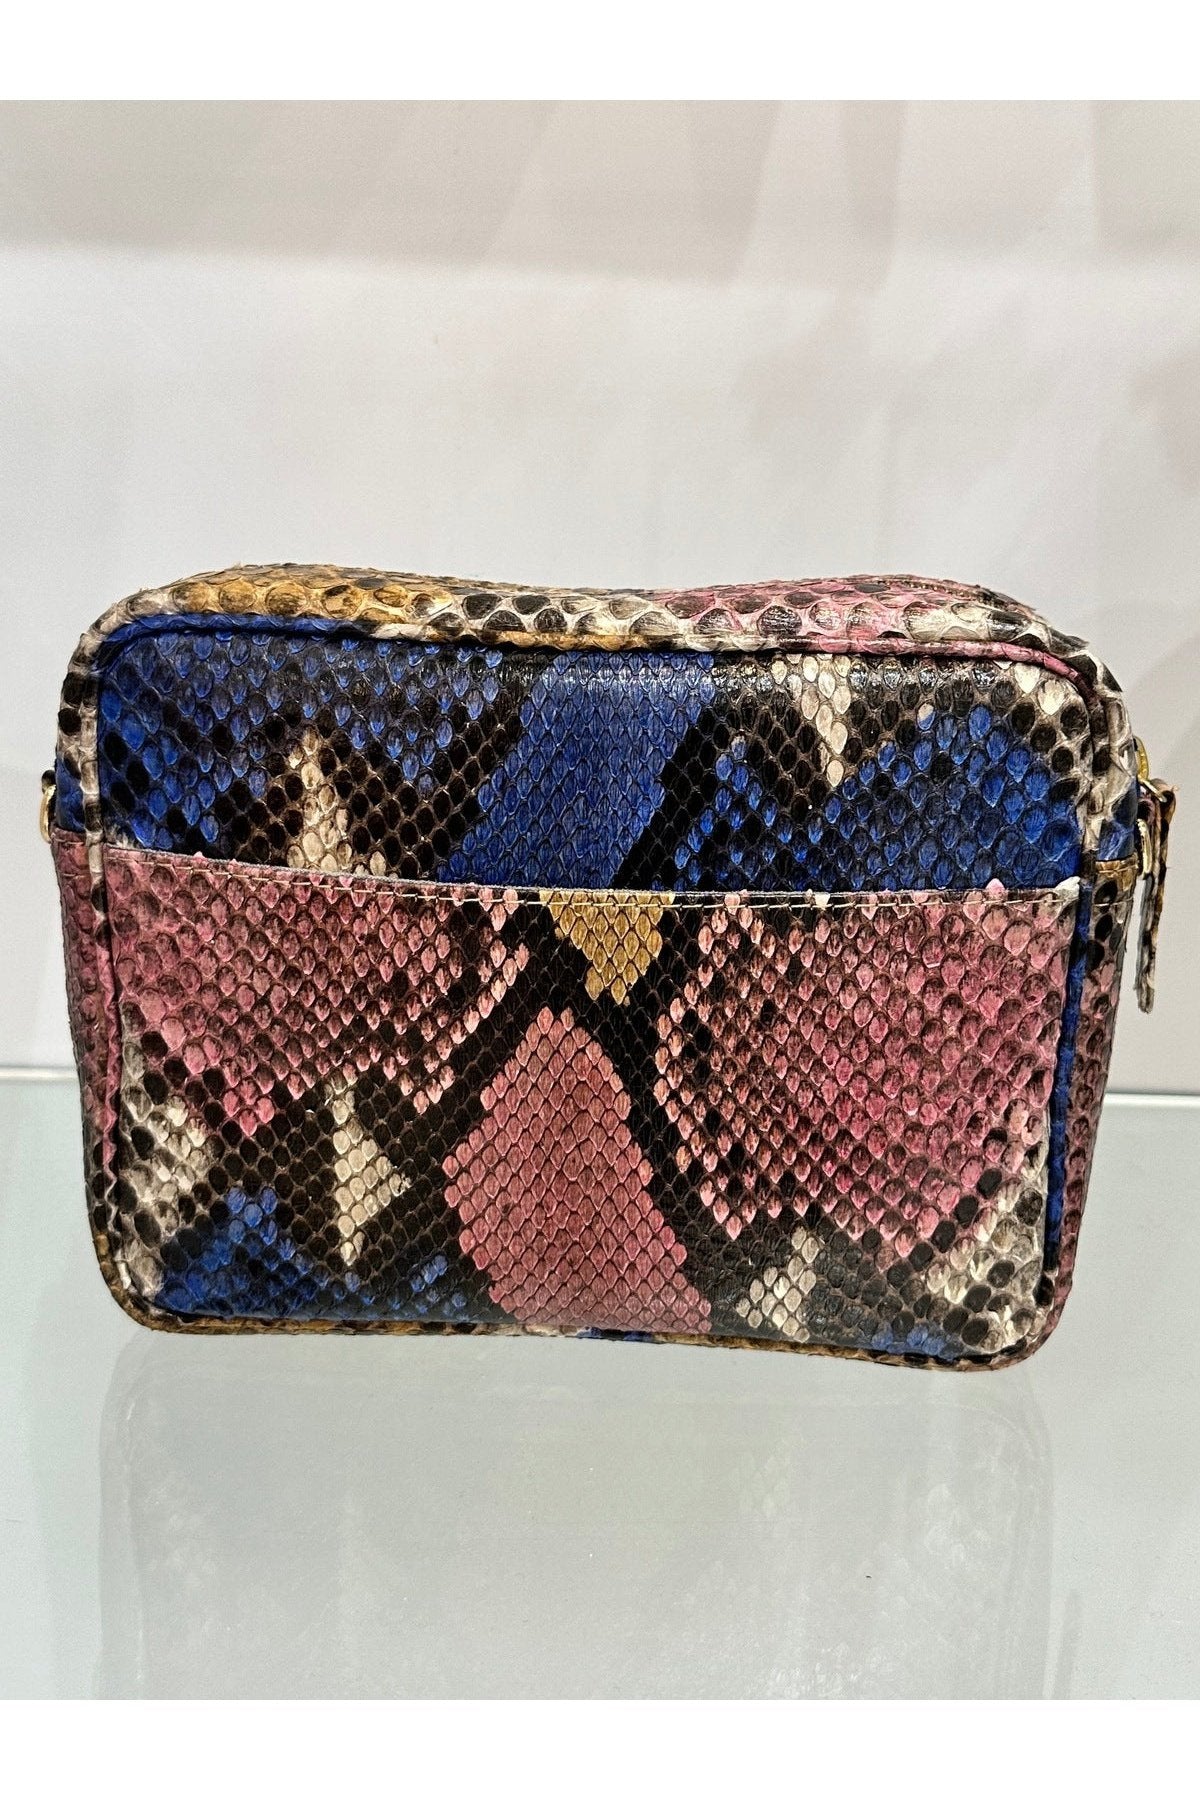 Authentic Shoulder Strap Python for The Bag CD/Purple Shoulder Strap bag/Strap for CD Bag/Bag Handle